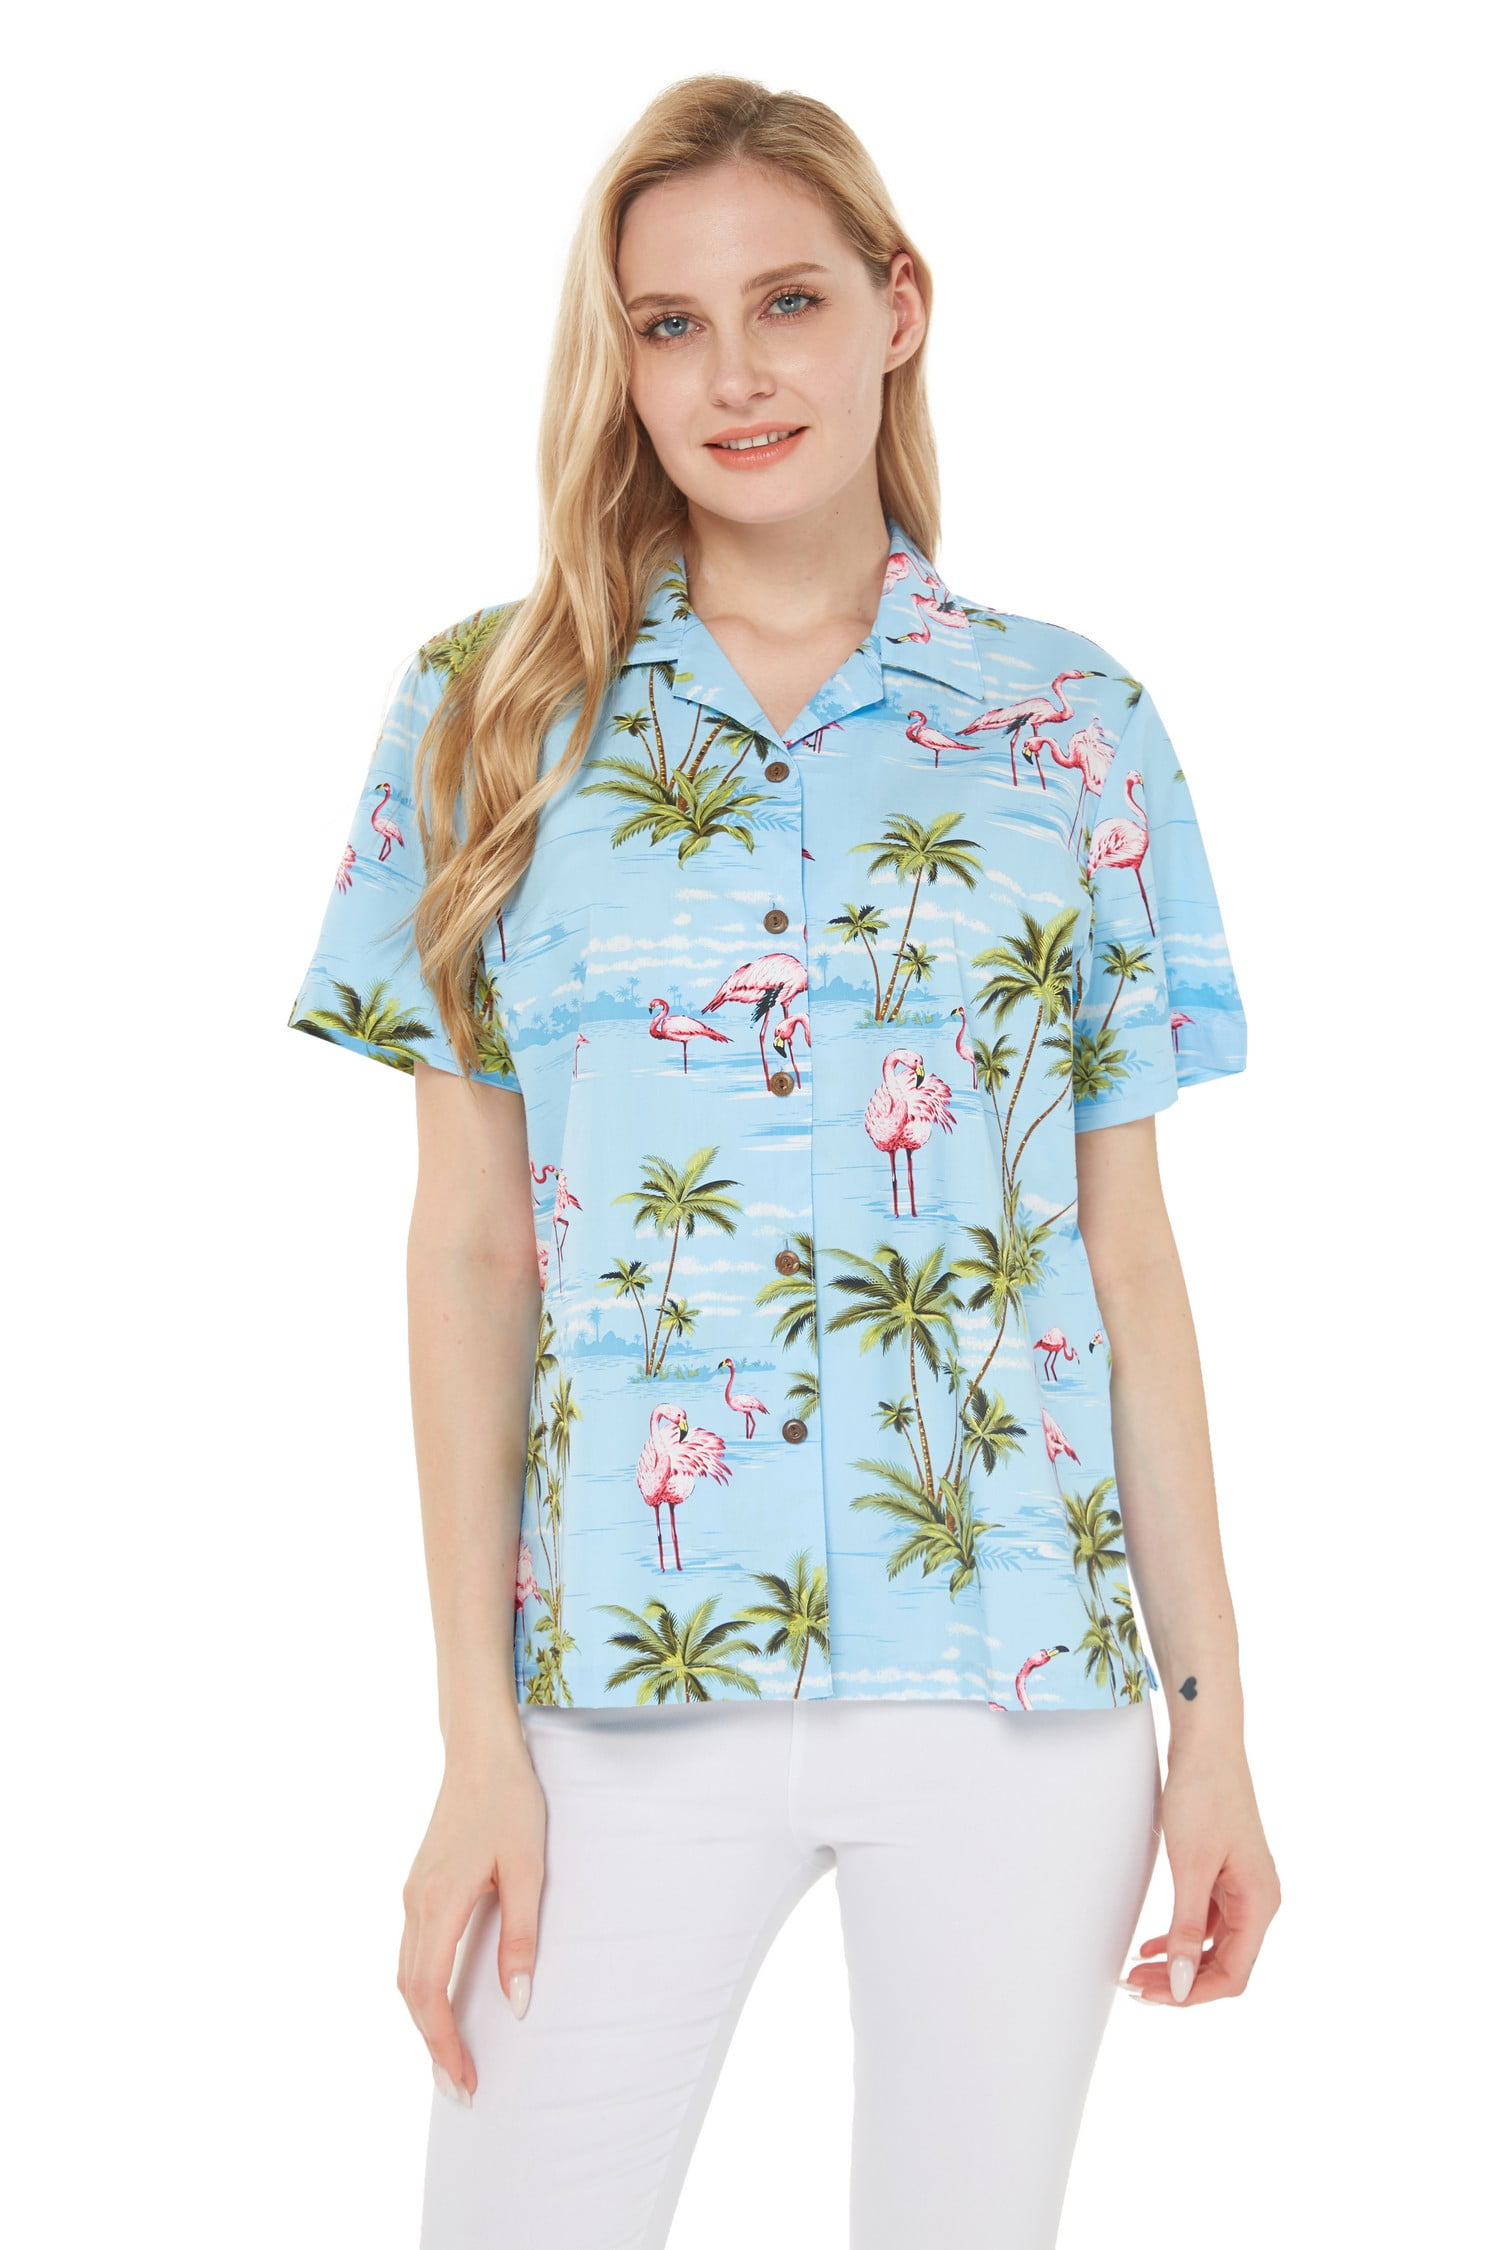 Made in Hawaii Women's Hawaiian Lady Aloha Shirt in Pink Flamingo Palm ...